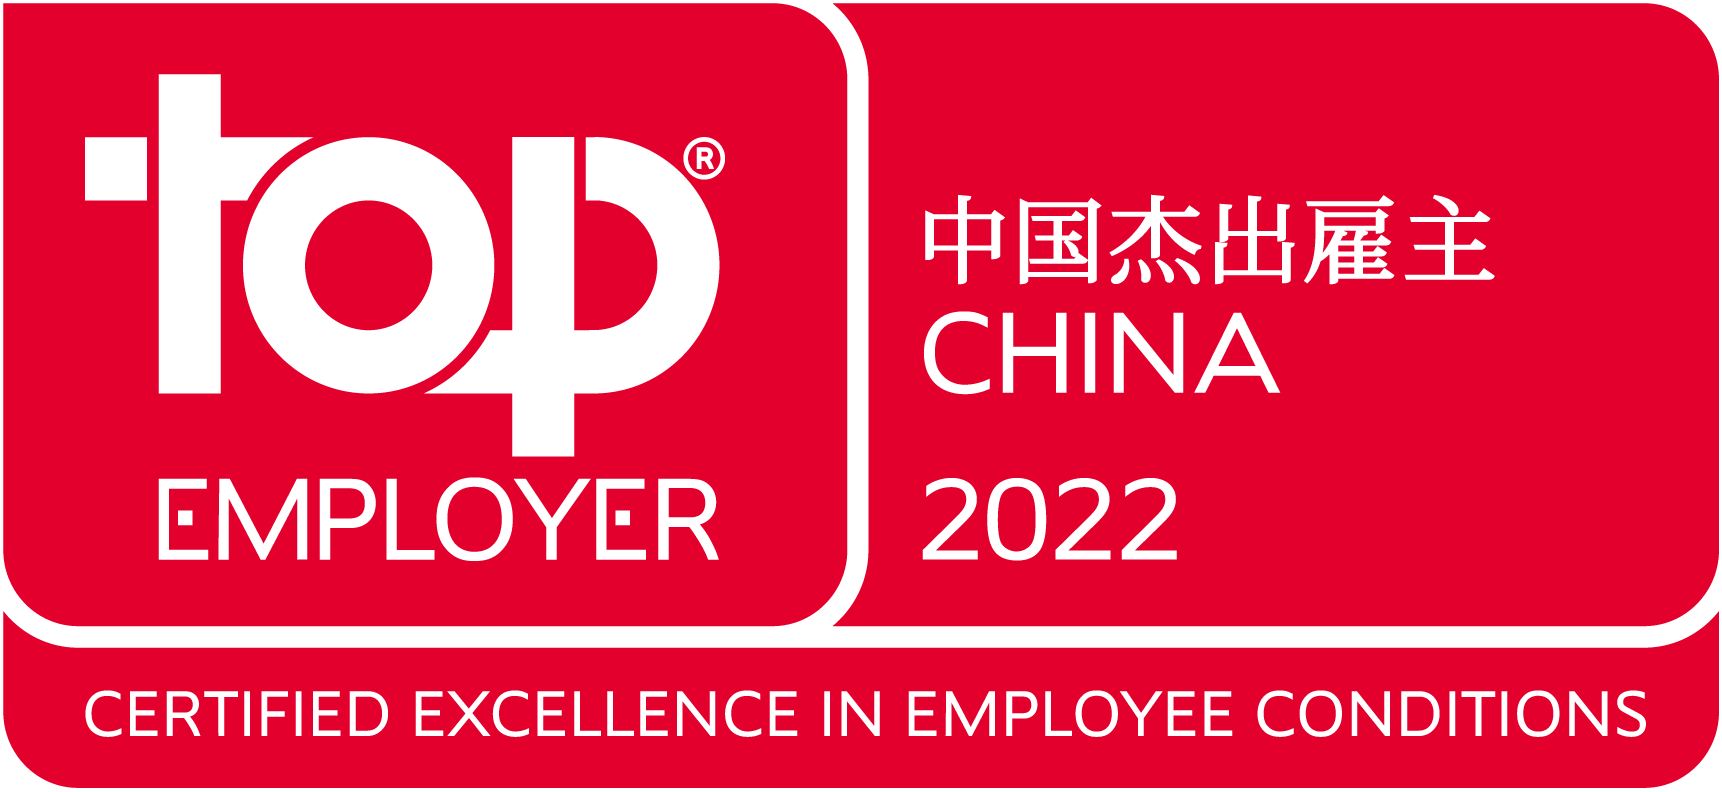 Top Employer China 2022